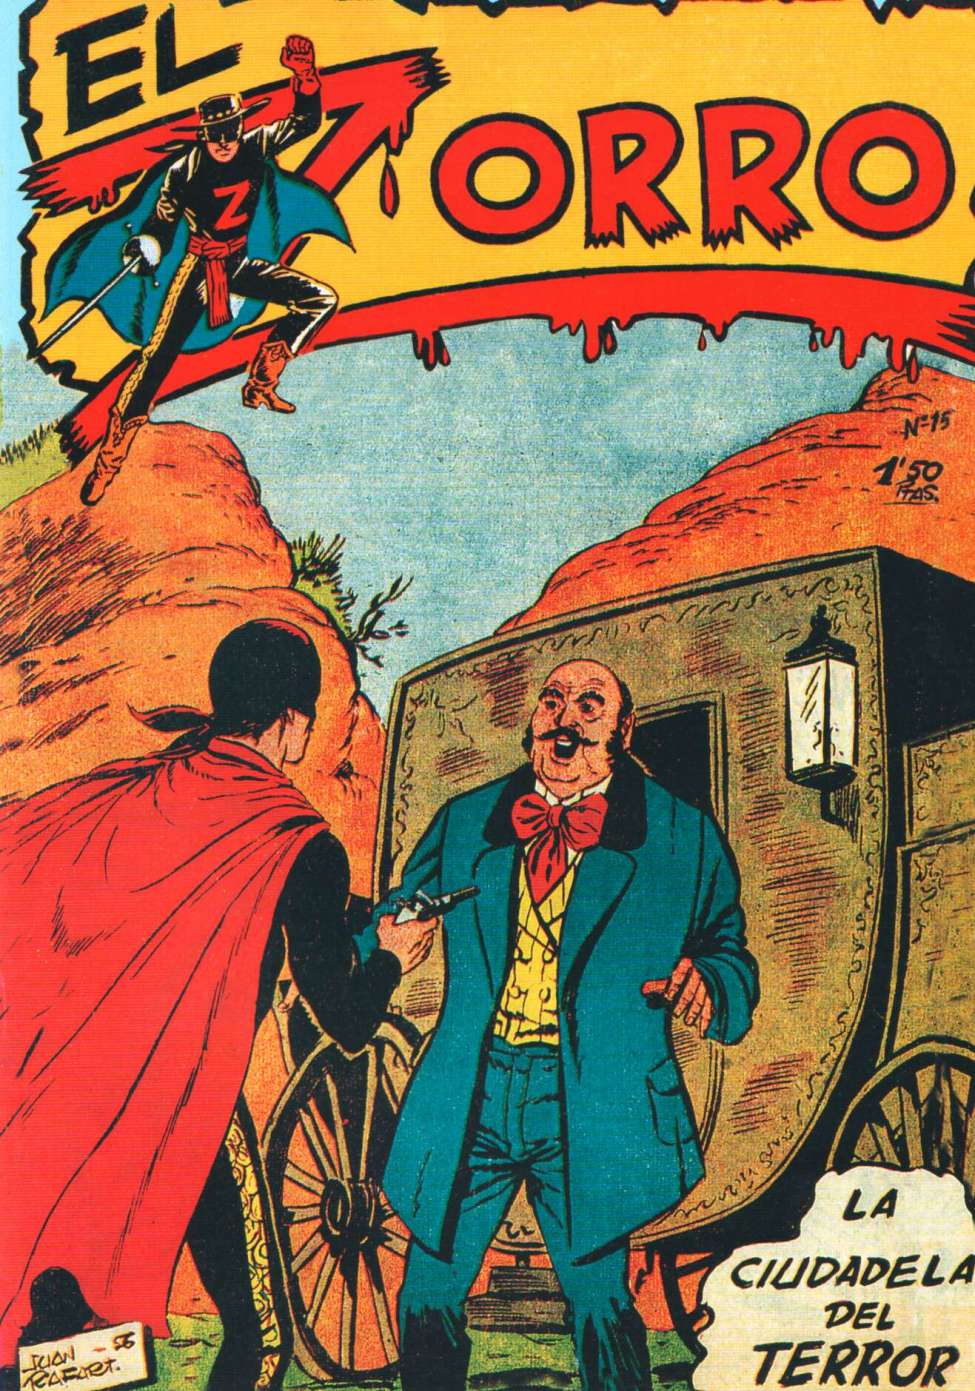 Comic Book Cover For El Zorro 15 - La Ciudadela del Terror